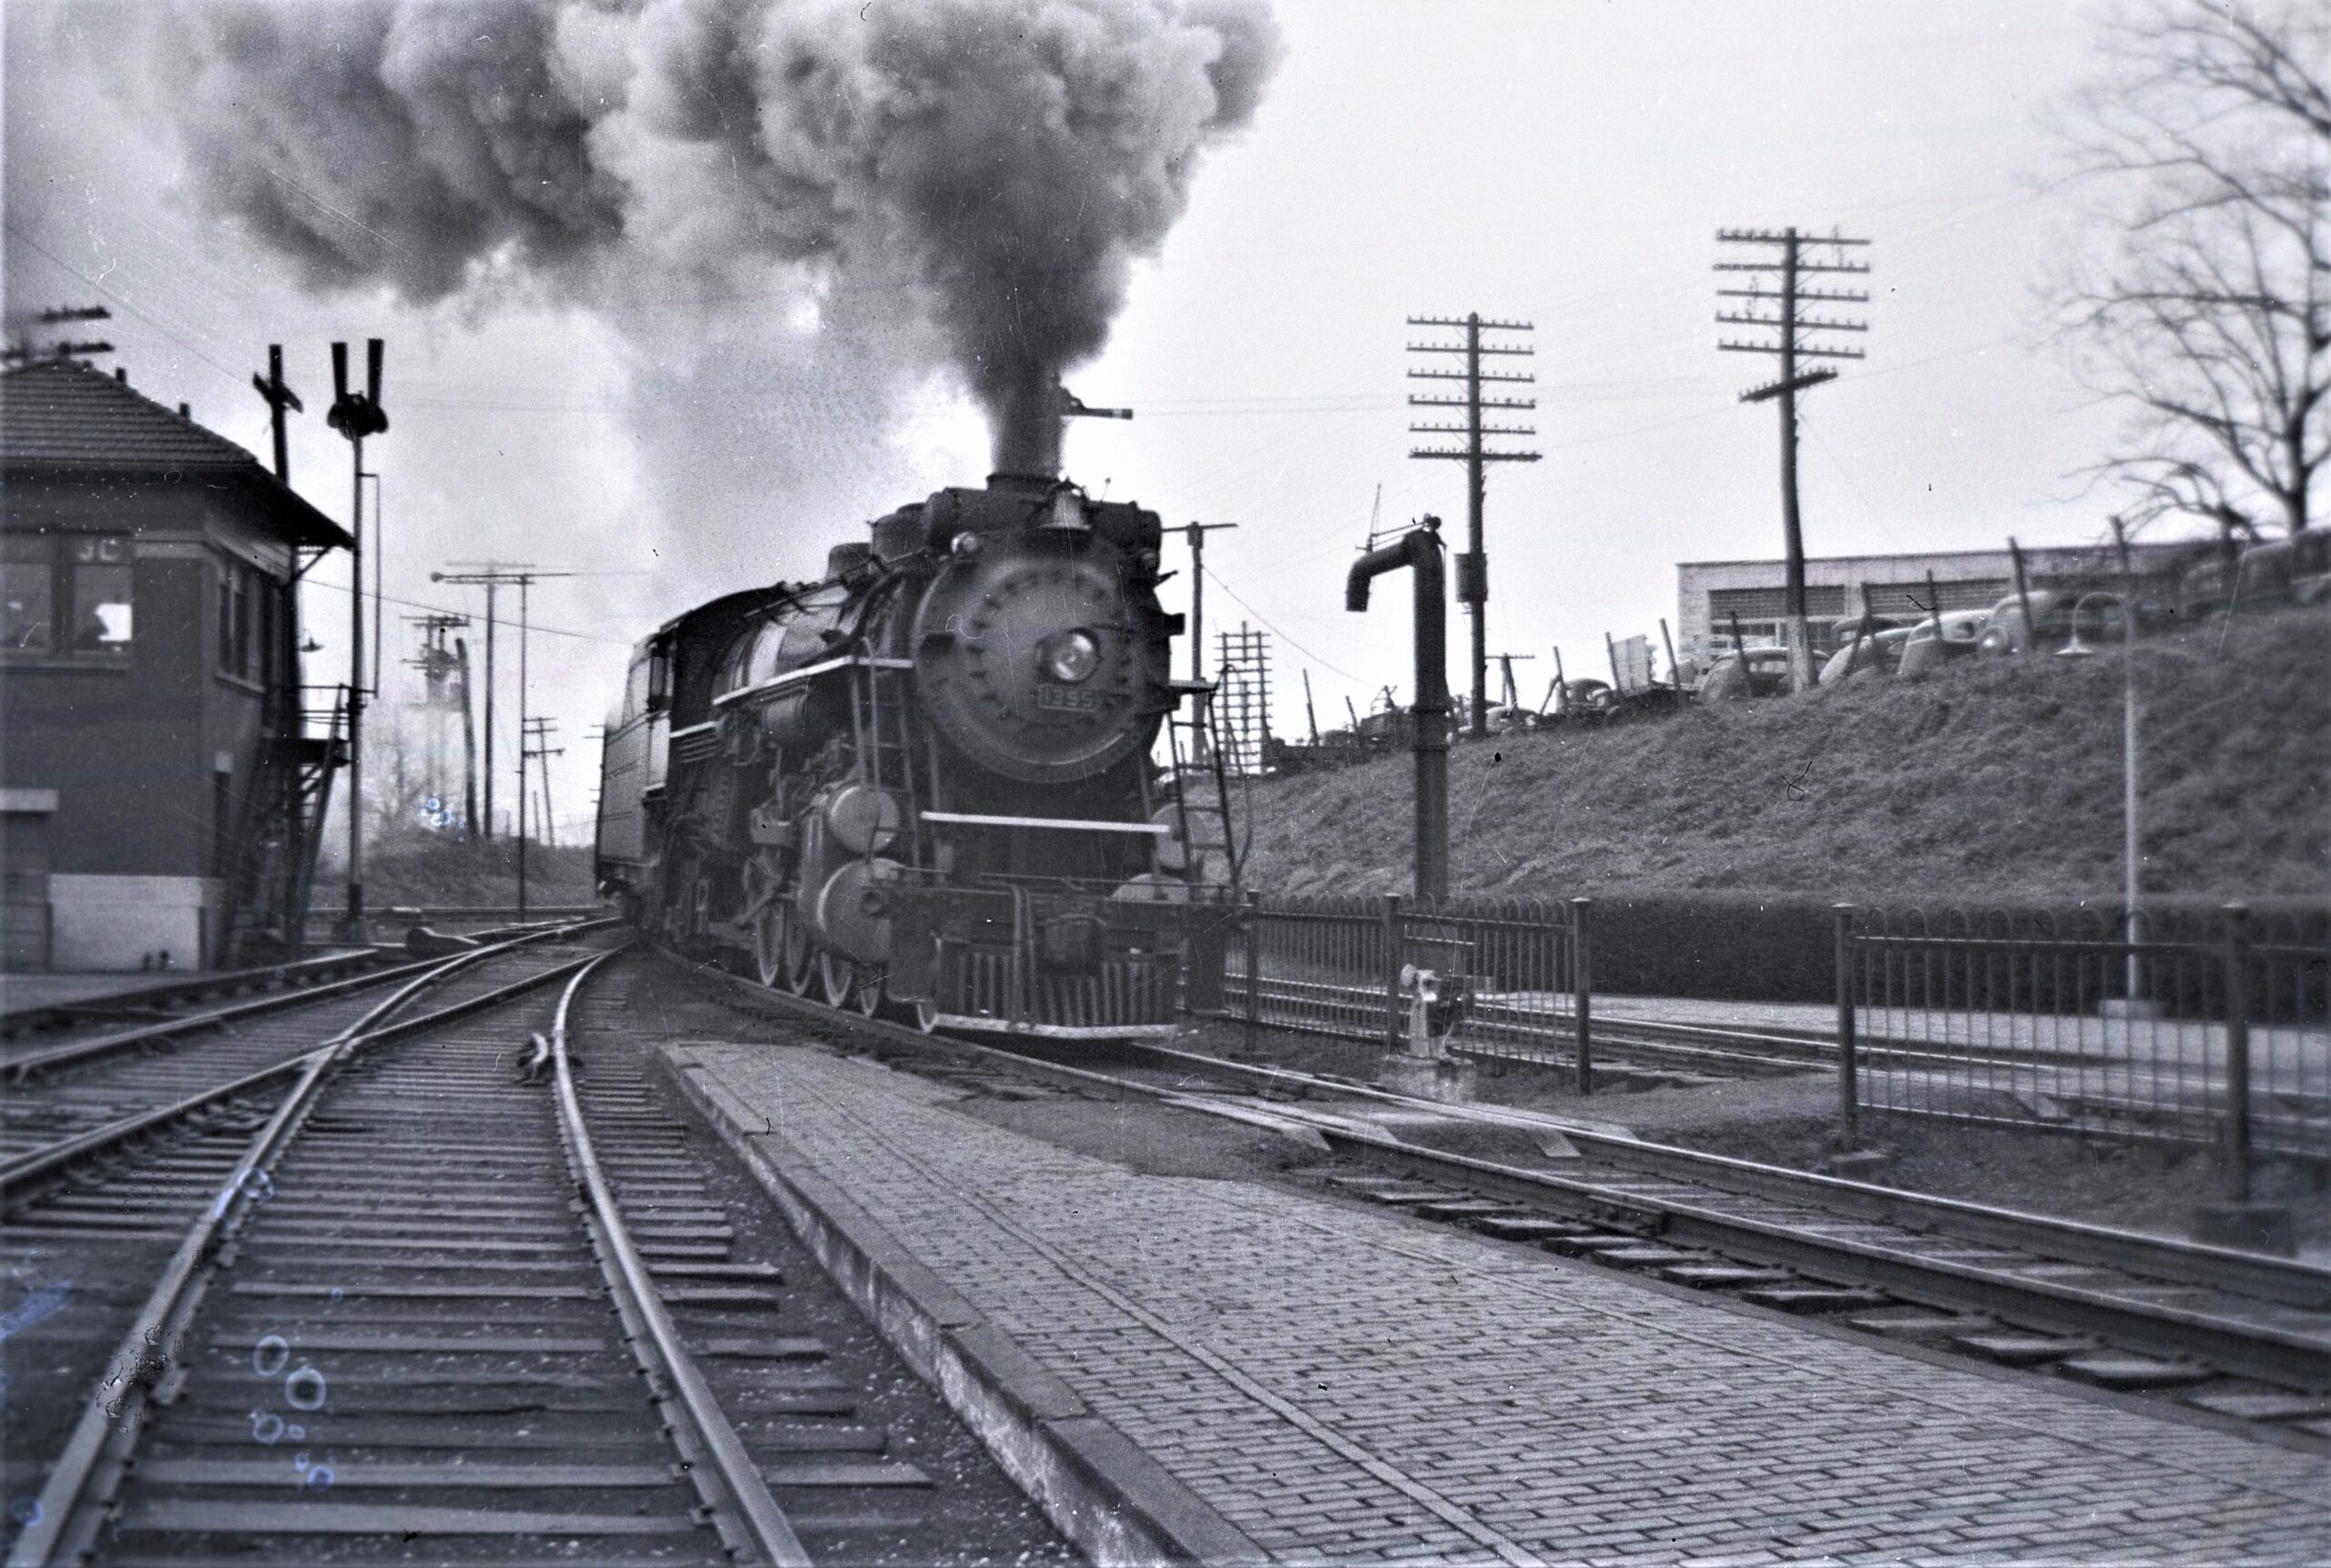 Southern Railway | Charlottesville, Virginia | Class Ps-4 4-6-2 #155 steam locomotive | Station Platform | Water Plug | JC Tower | April 1942 | Fielding Lew Bowman photograph